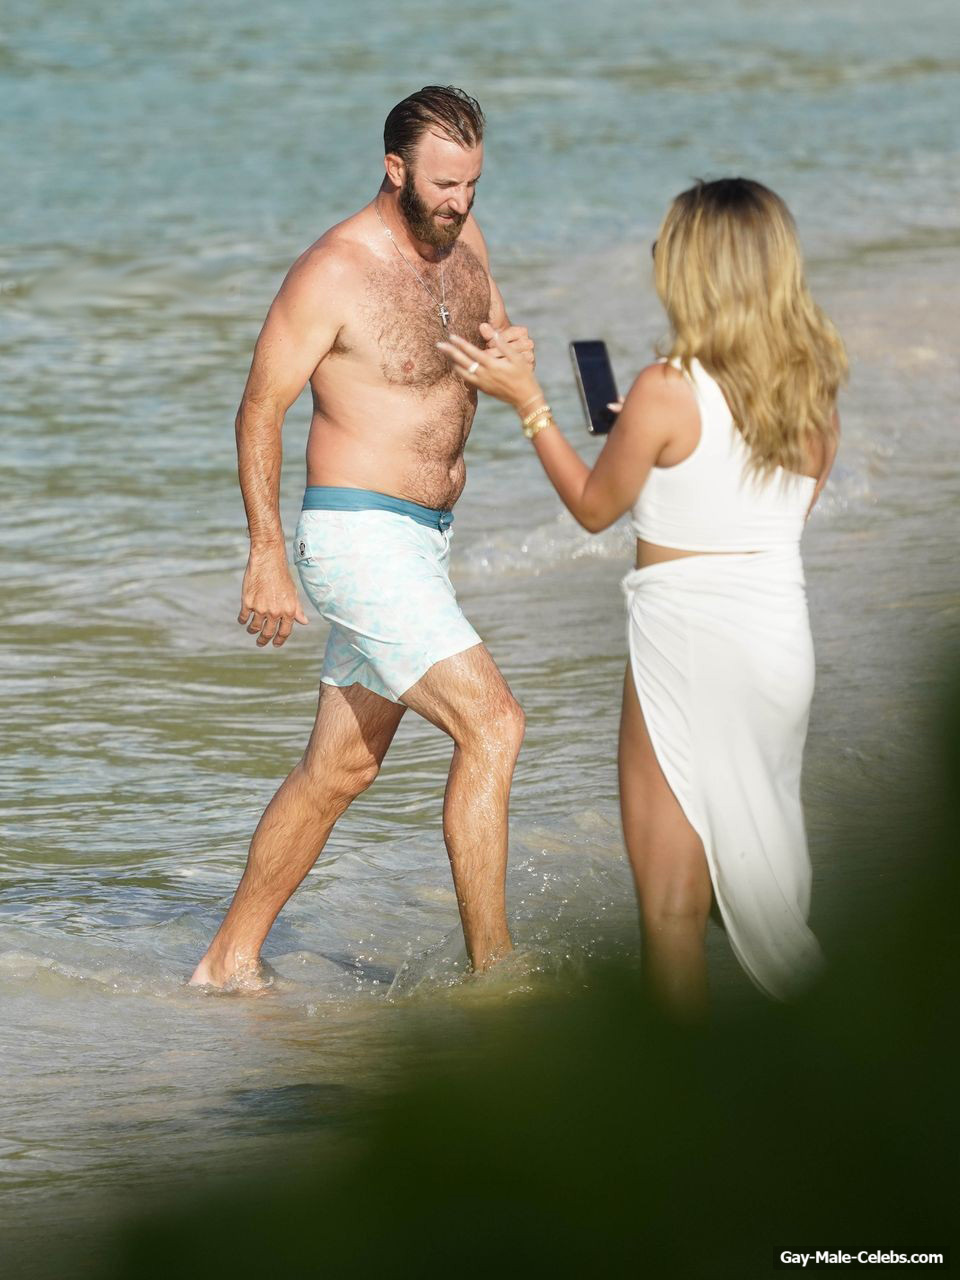 Dustin Johnson Sunbathing Shirtless On A Beach